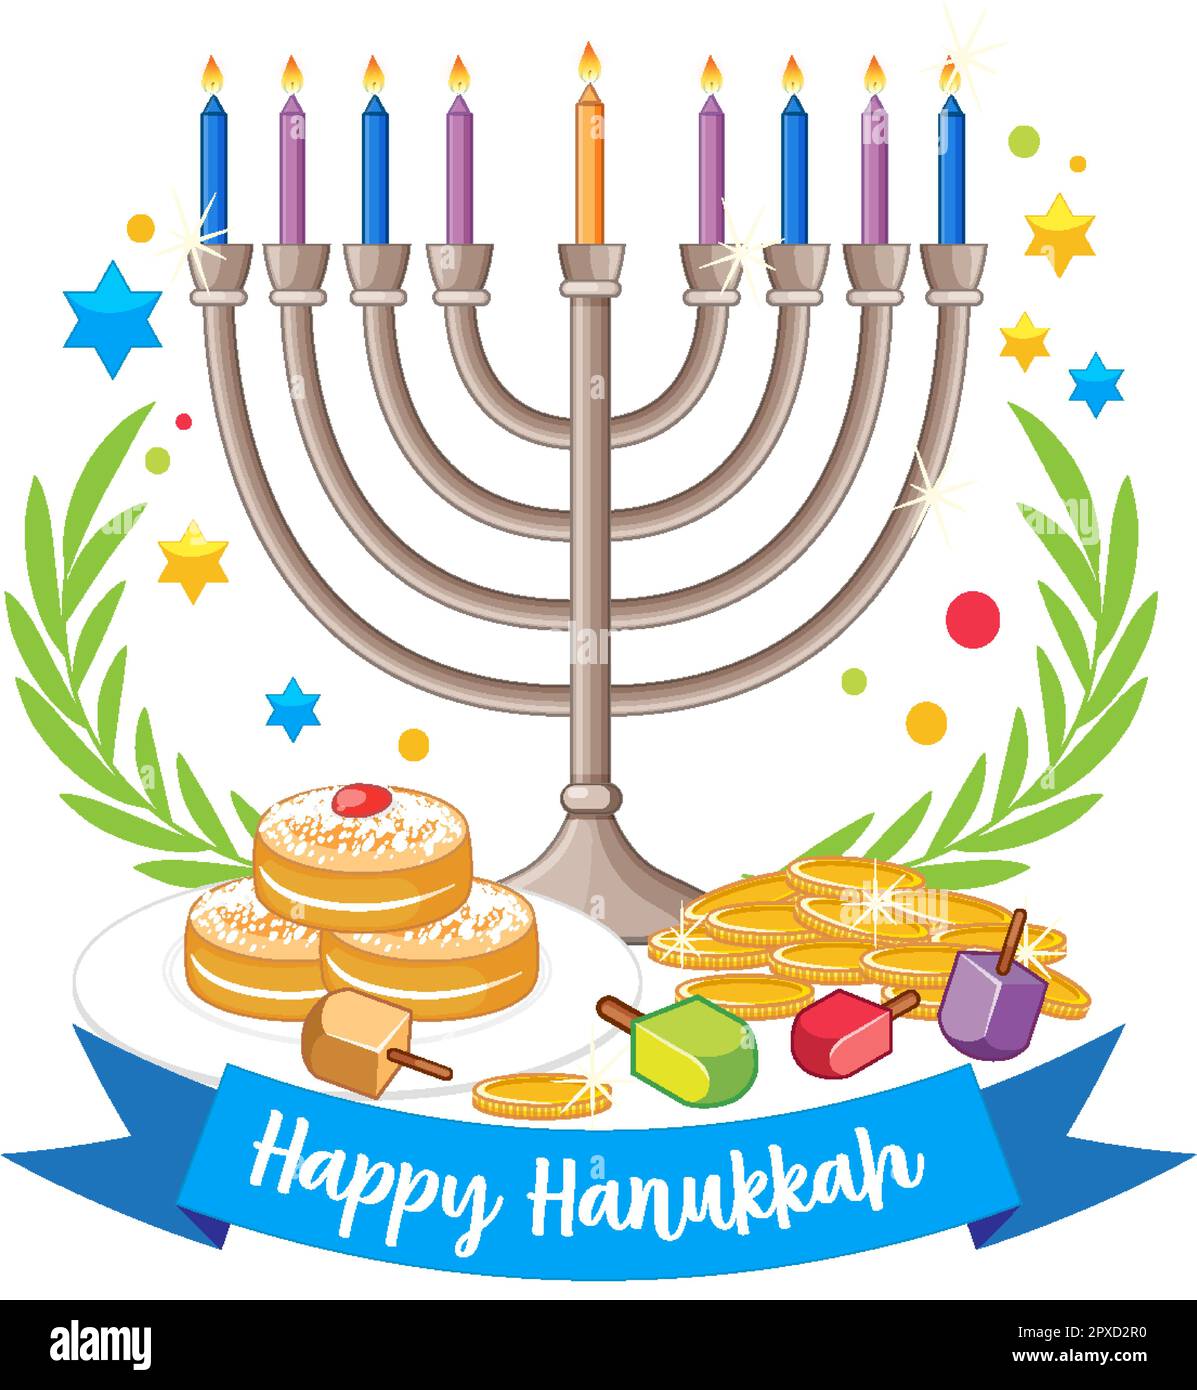 Happy Hanukkah Banner Design illustration Stock Vector Image & Art - Alamy